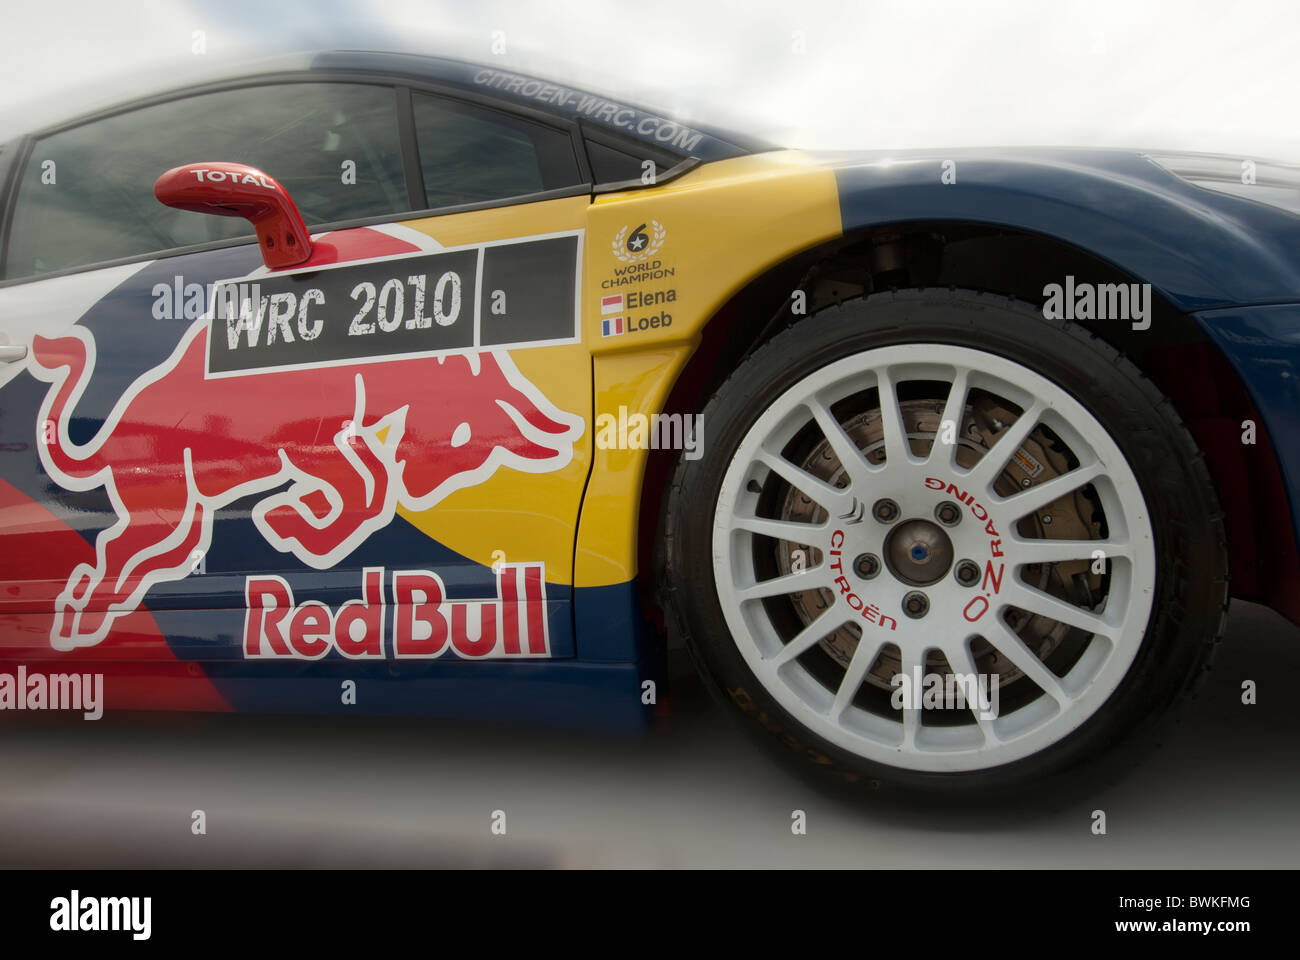 Red Bull WRC rally car Foto Stock